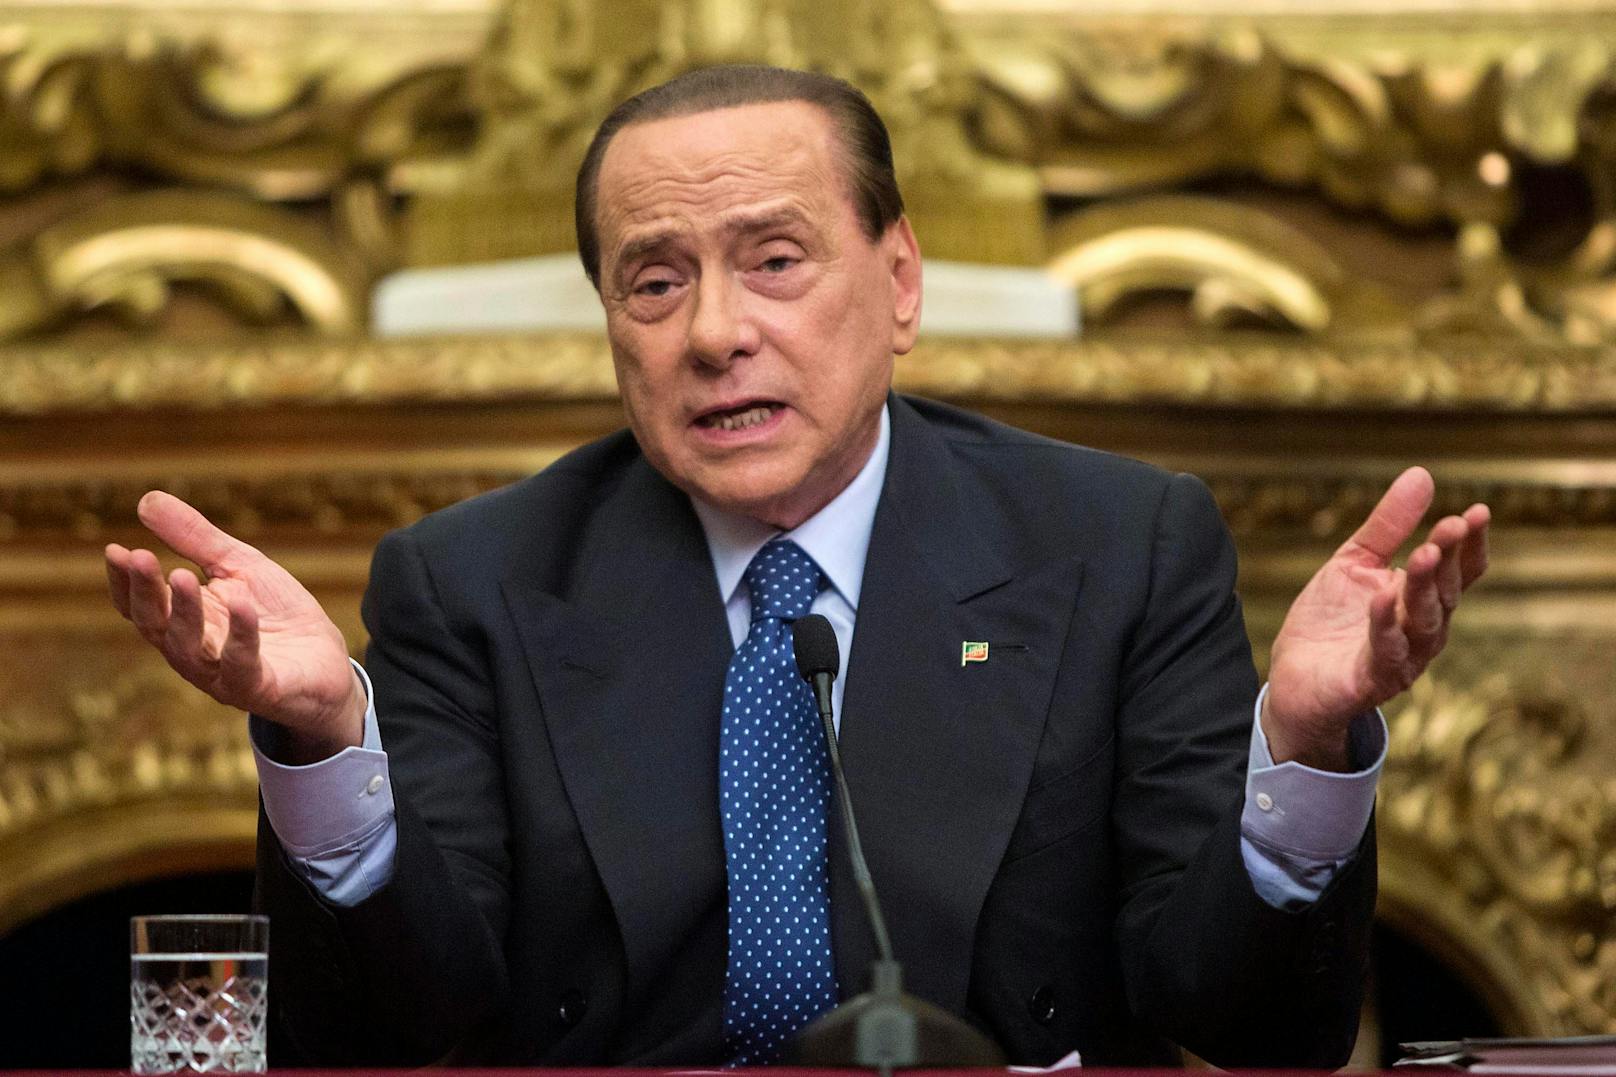 Silvio Berlusconi wurde 86 Jahre alt.